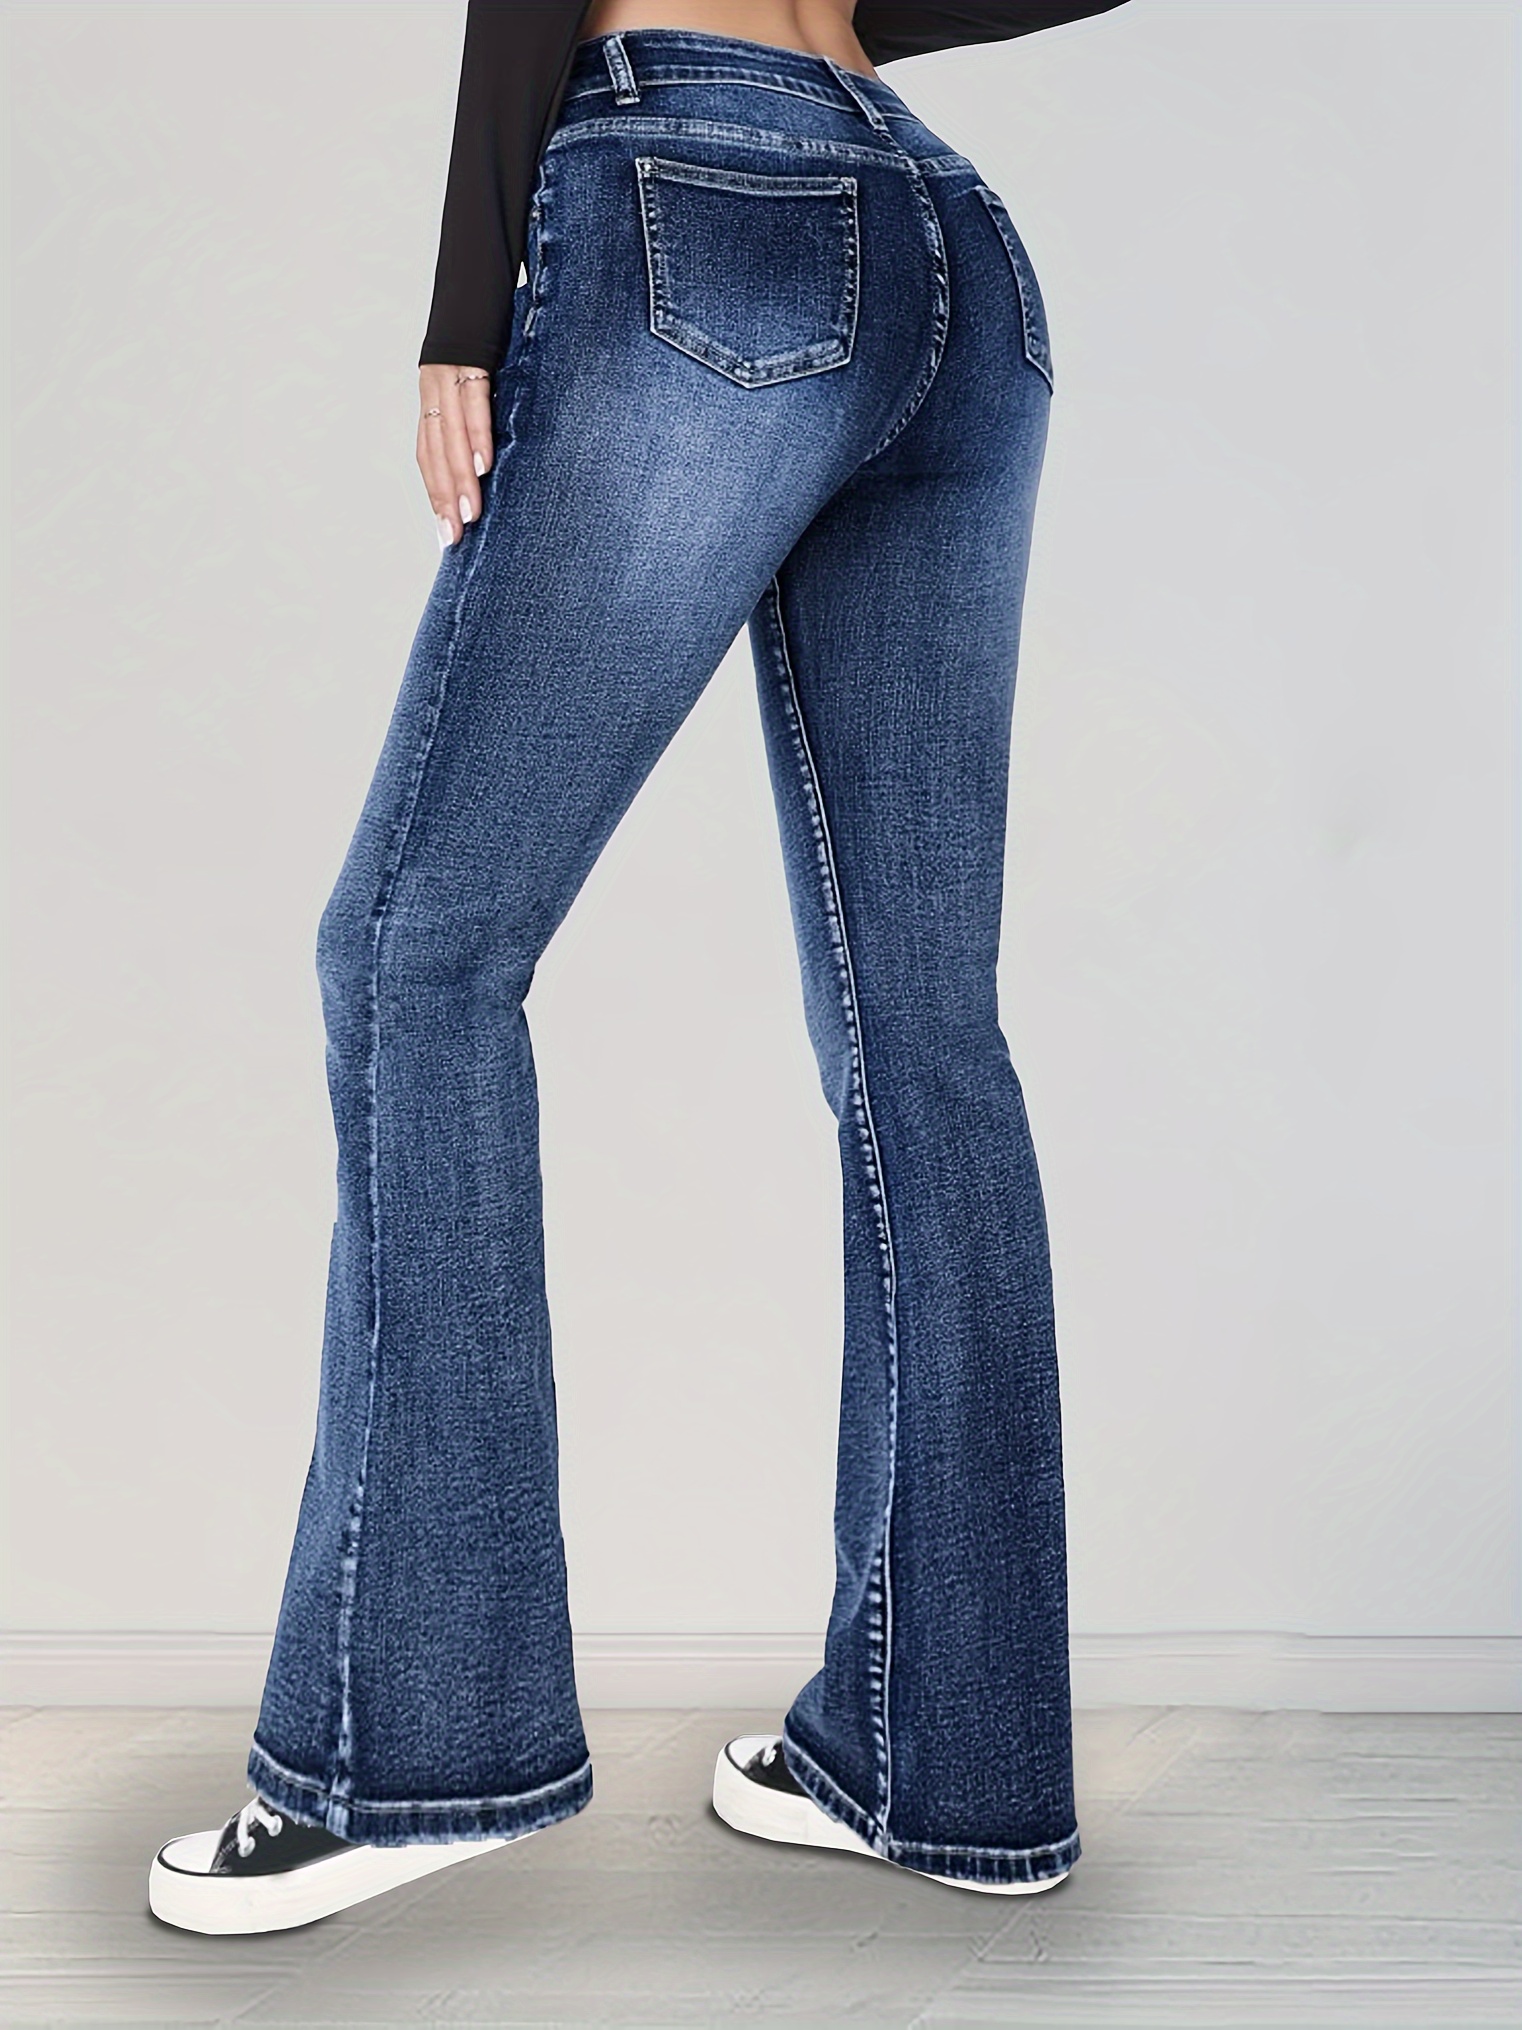 Girls Bell Bottom Jeans Fashion Elastic Waist Flared Denim Pants